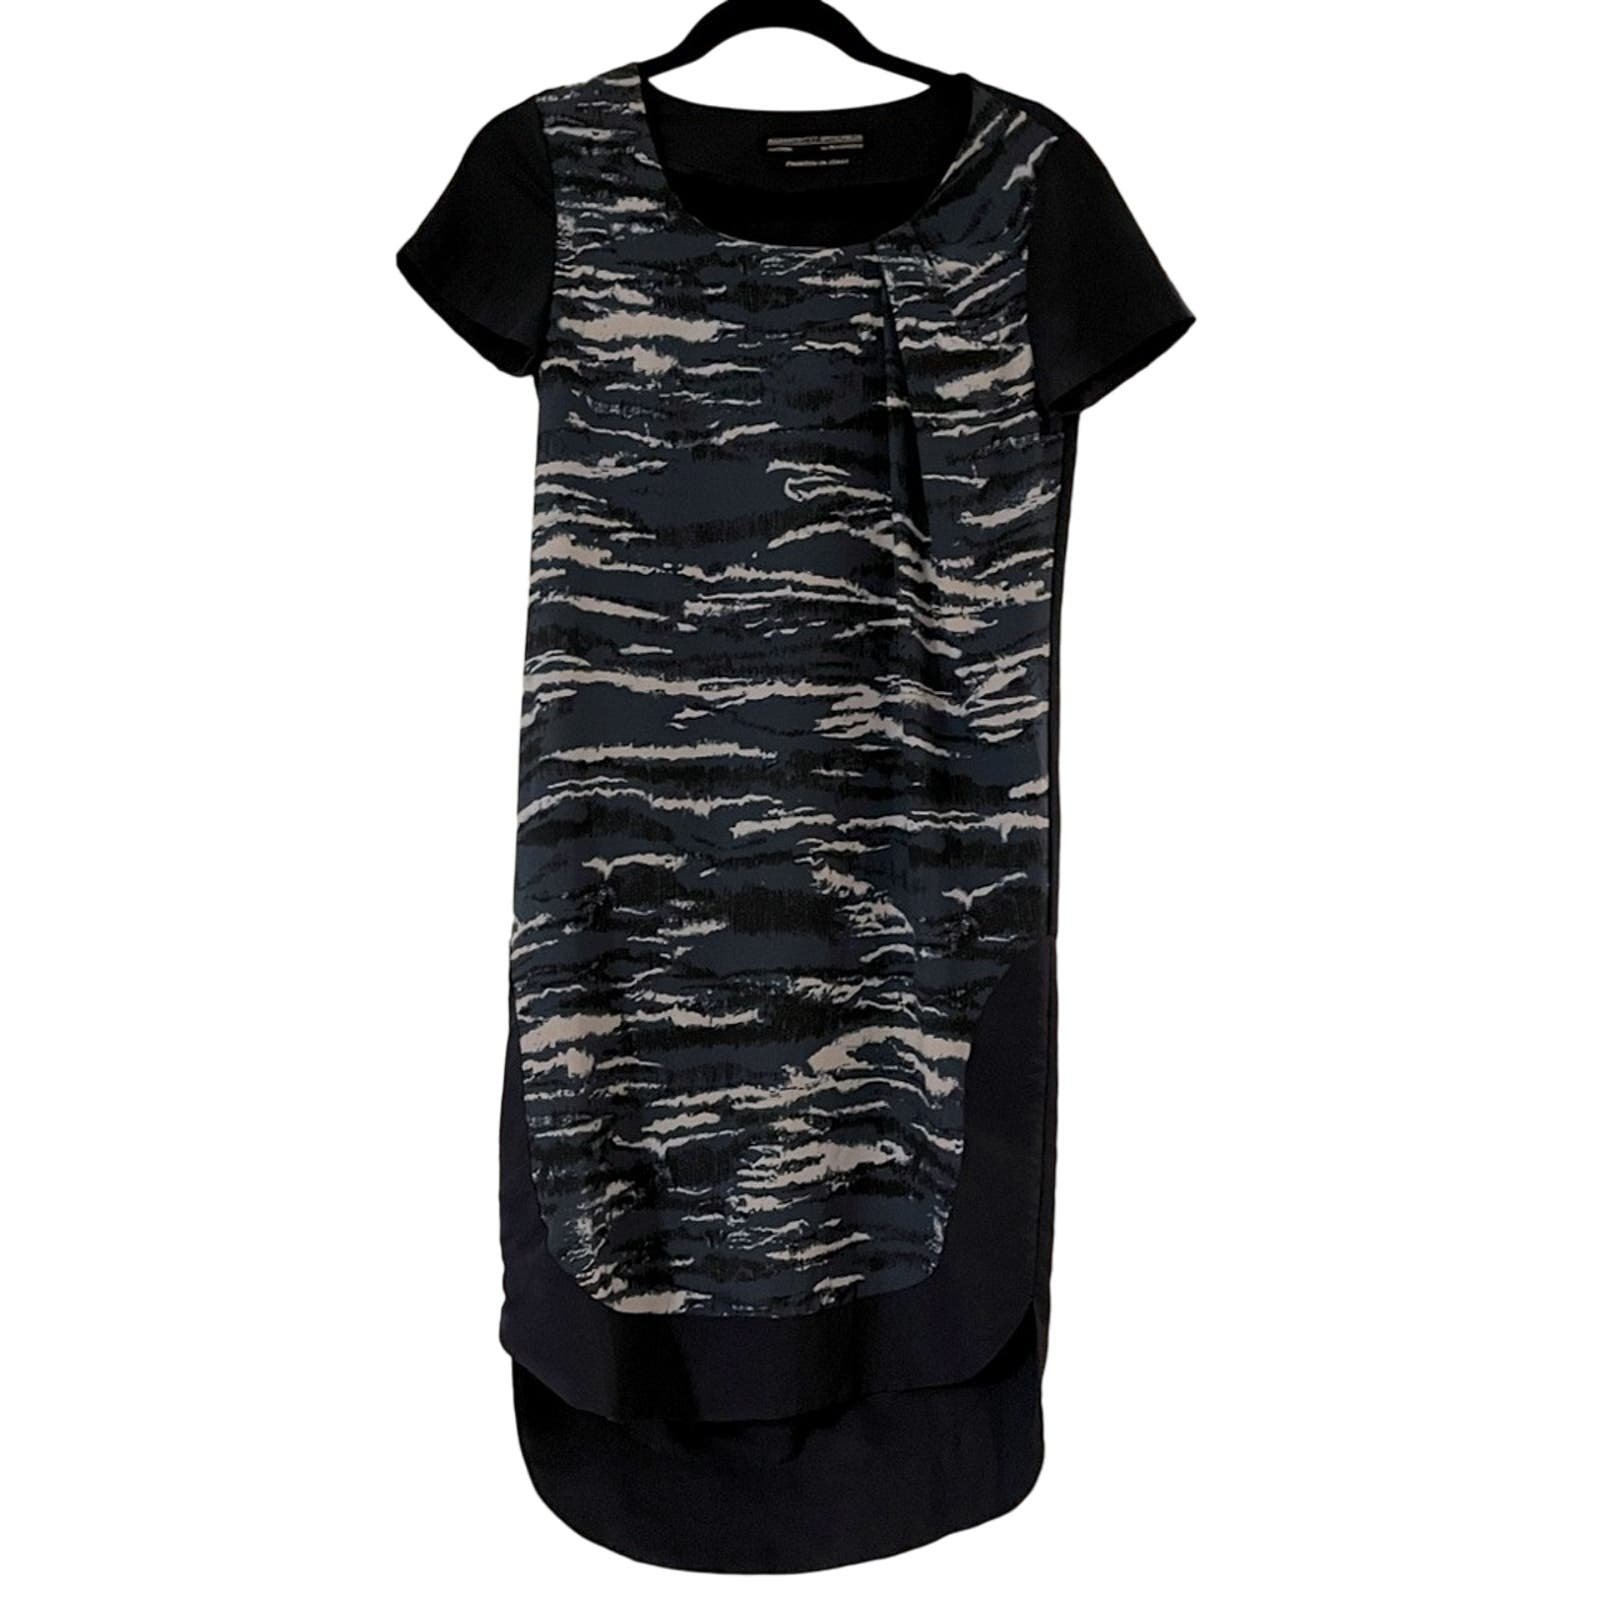 All Saints Lacyn Flec Polyester Dress Size UK 4 / US 0 / EU 32 7vWb5RdNf